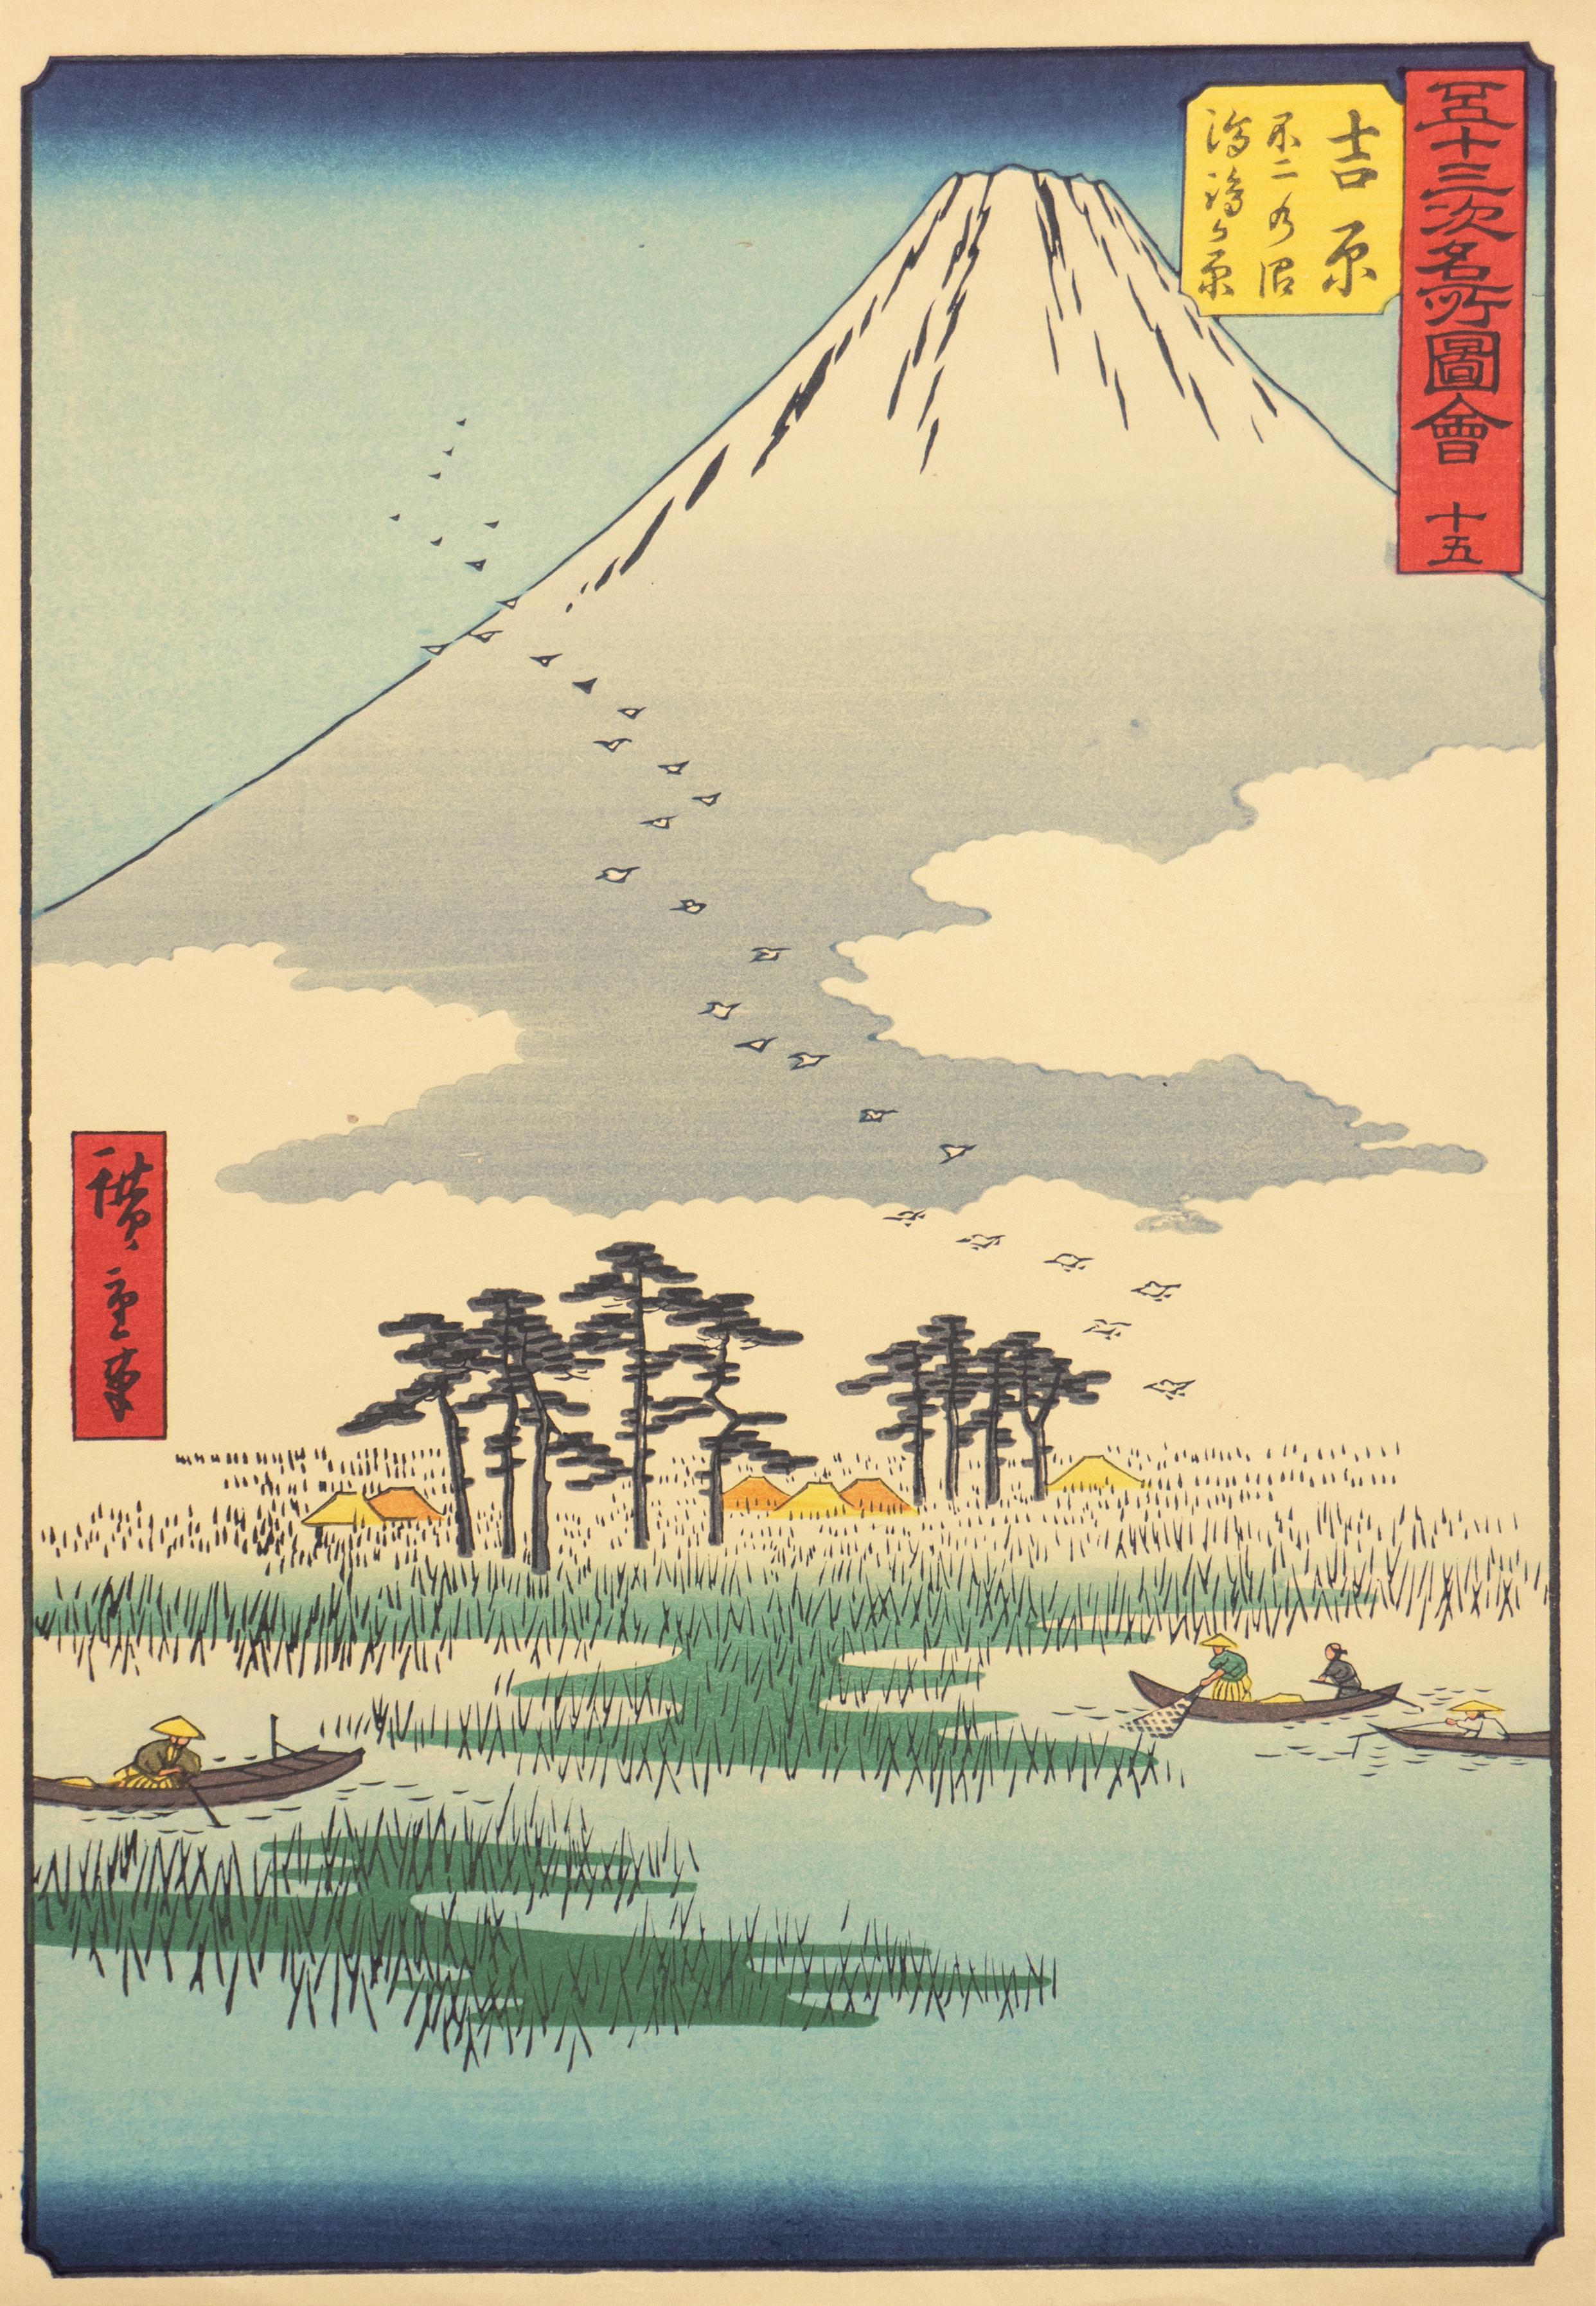 Utagawa Hiroshige (Ando Hiroshige) Landscape Print - 'Floating Islands, View of Mount Fuji', Japan, Ukiyo-E Woodblock, Floating World